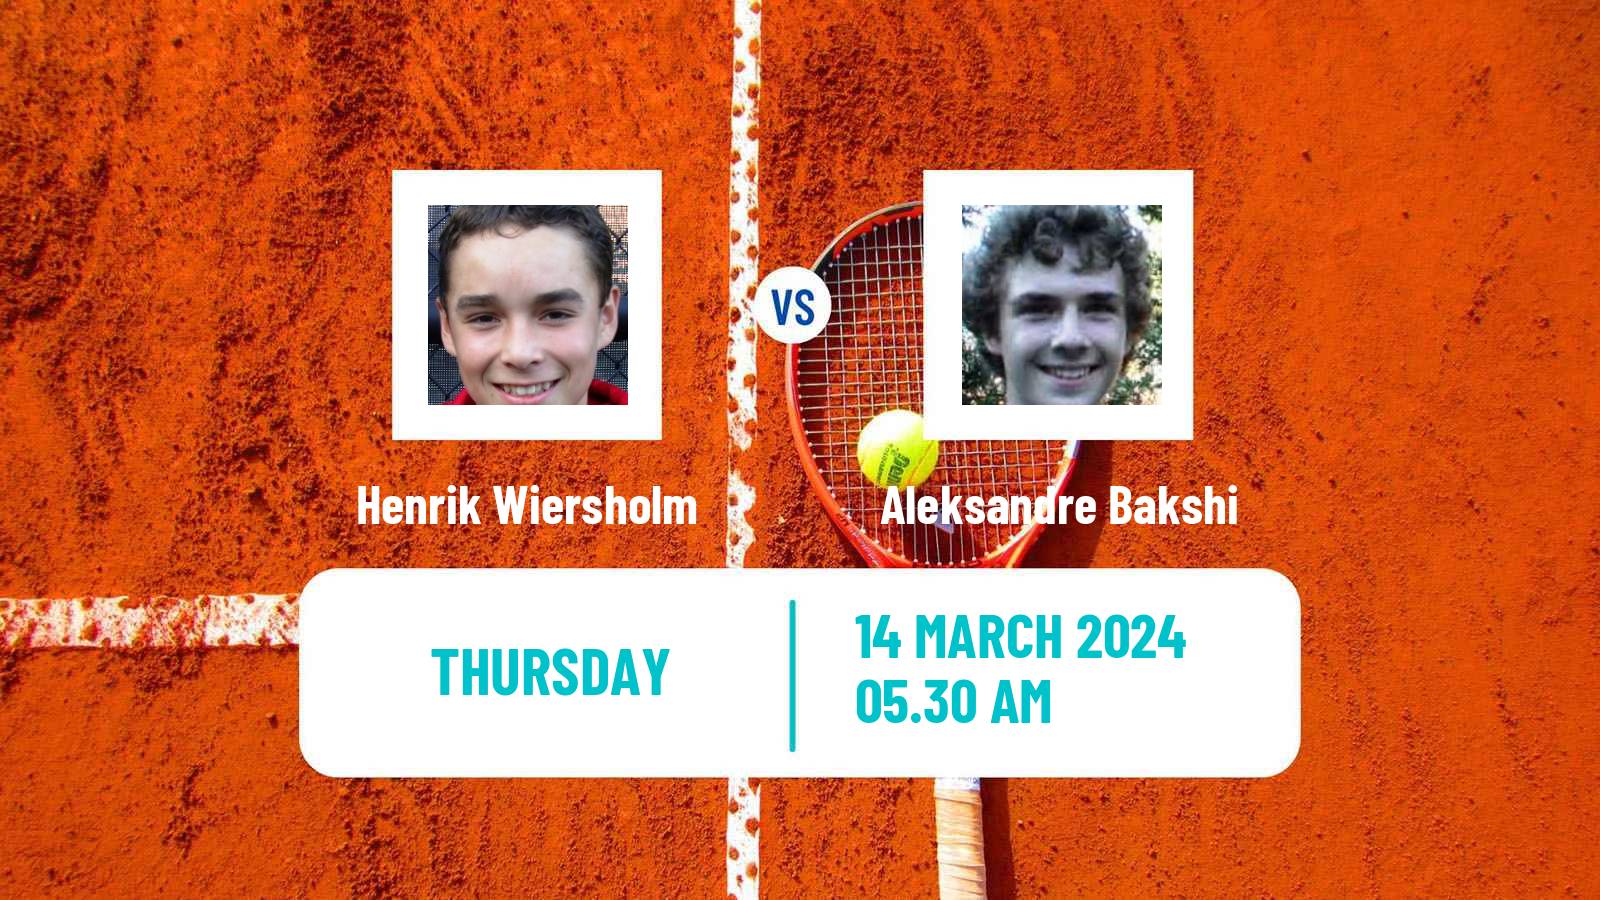 Tennis ITF M15 Heraklion 2 Men Henrik Wiersholm - Aleksandre Bakshi